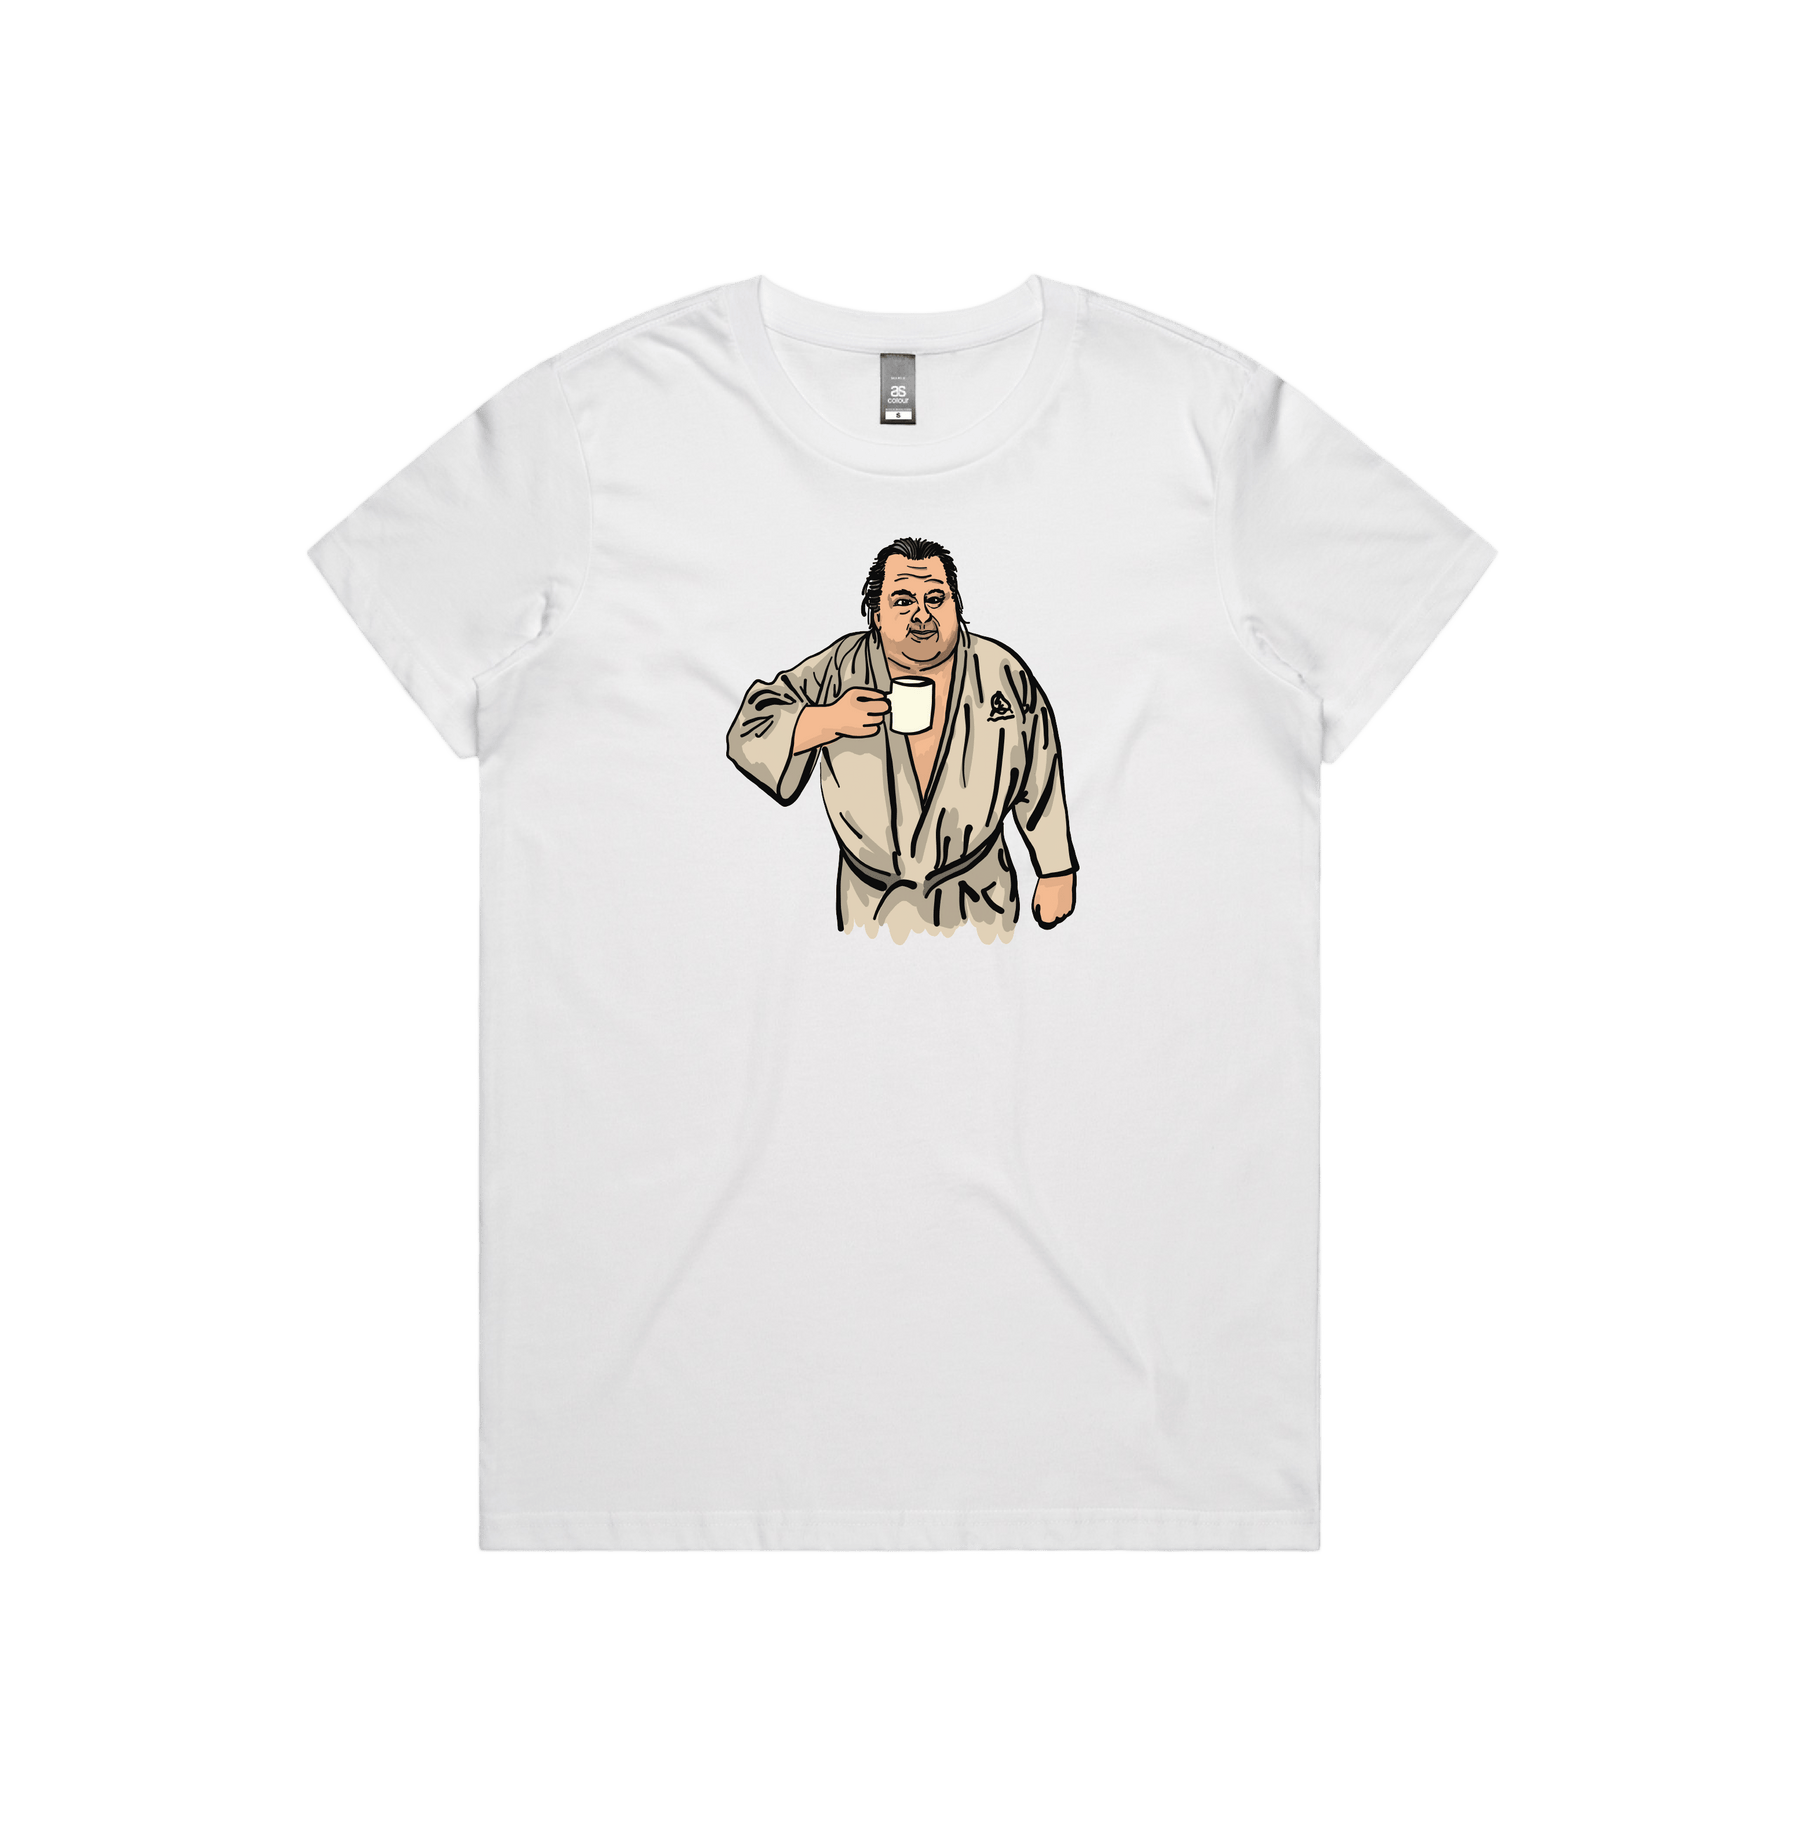 XS / White / Large Front Design Big Ed (90 Day Fiance) 🛺 - Women's T Shirt